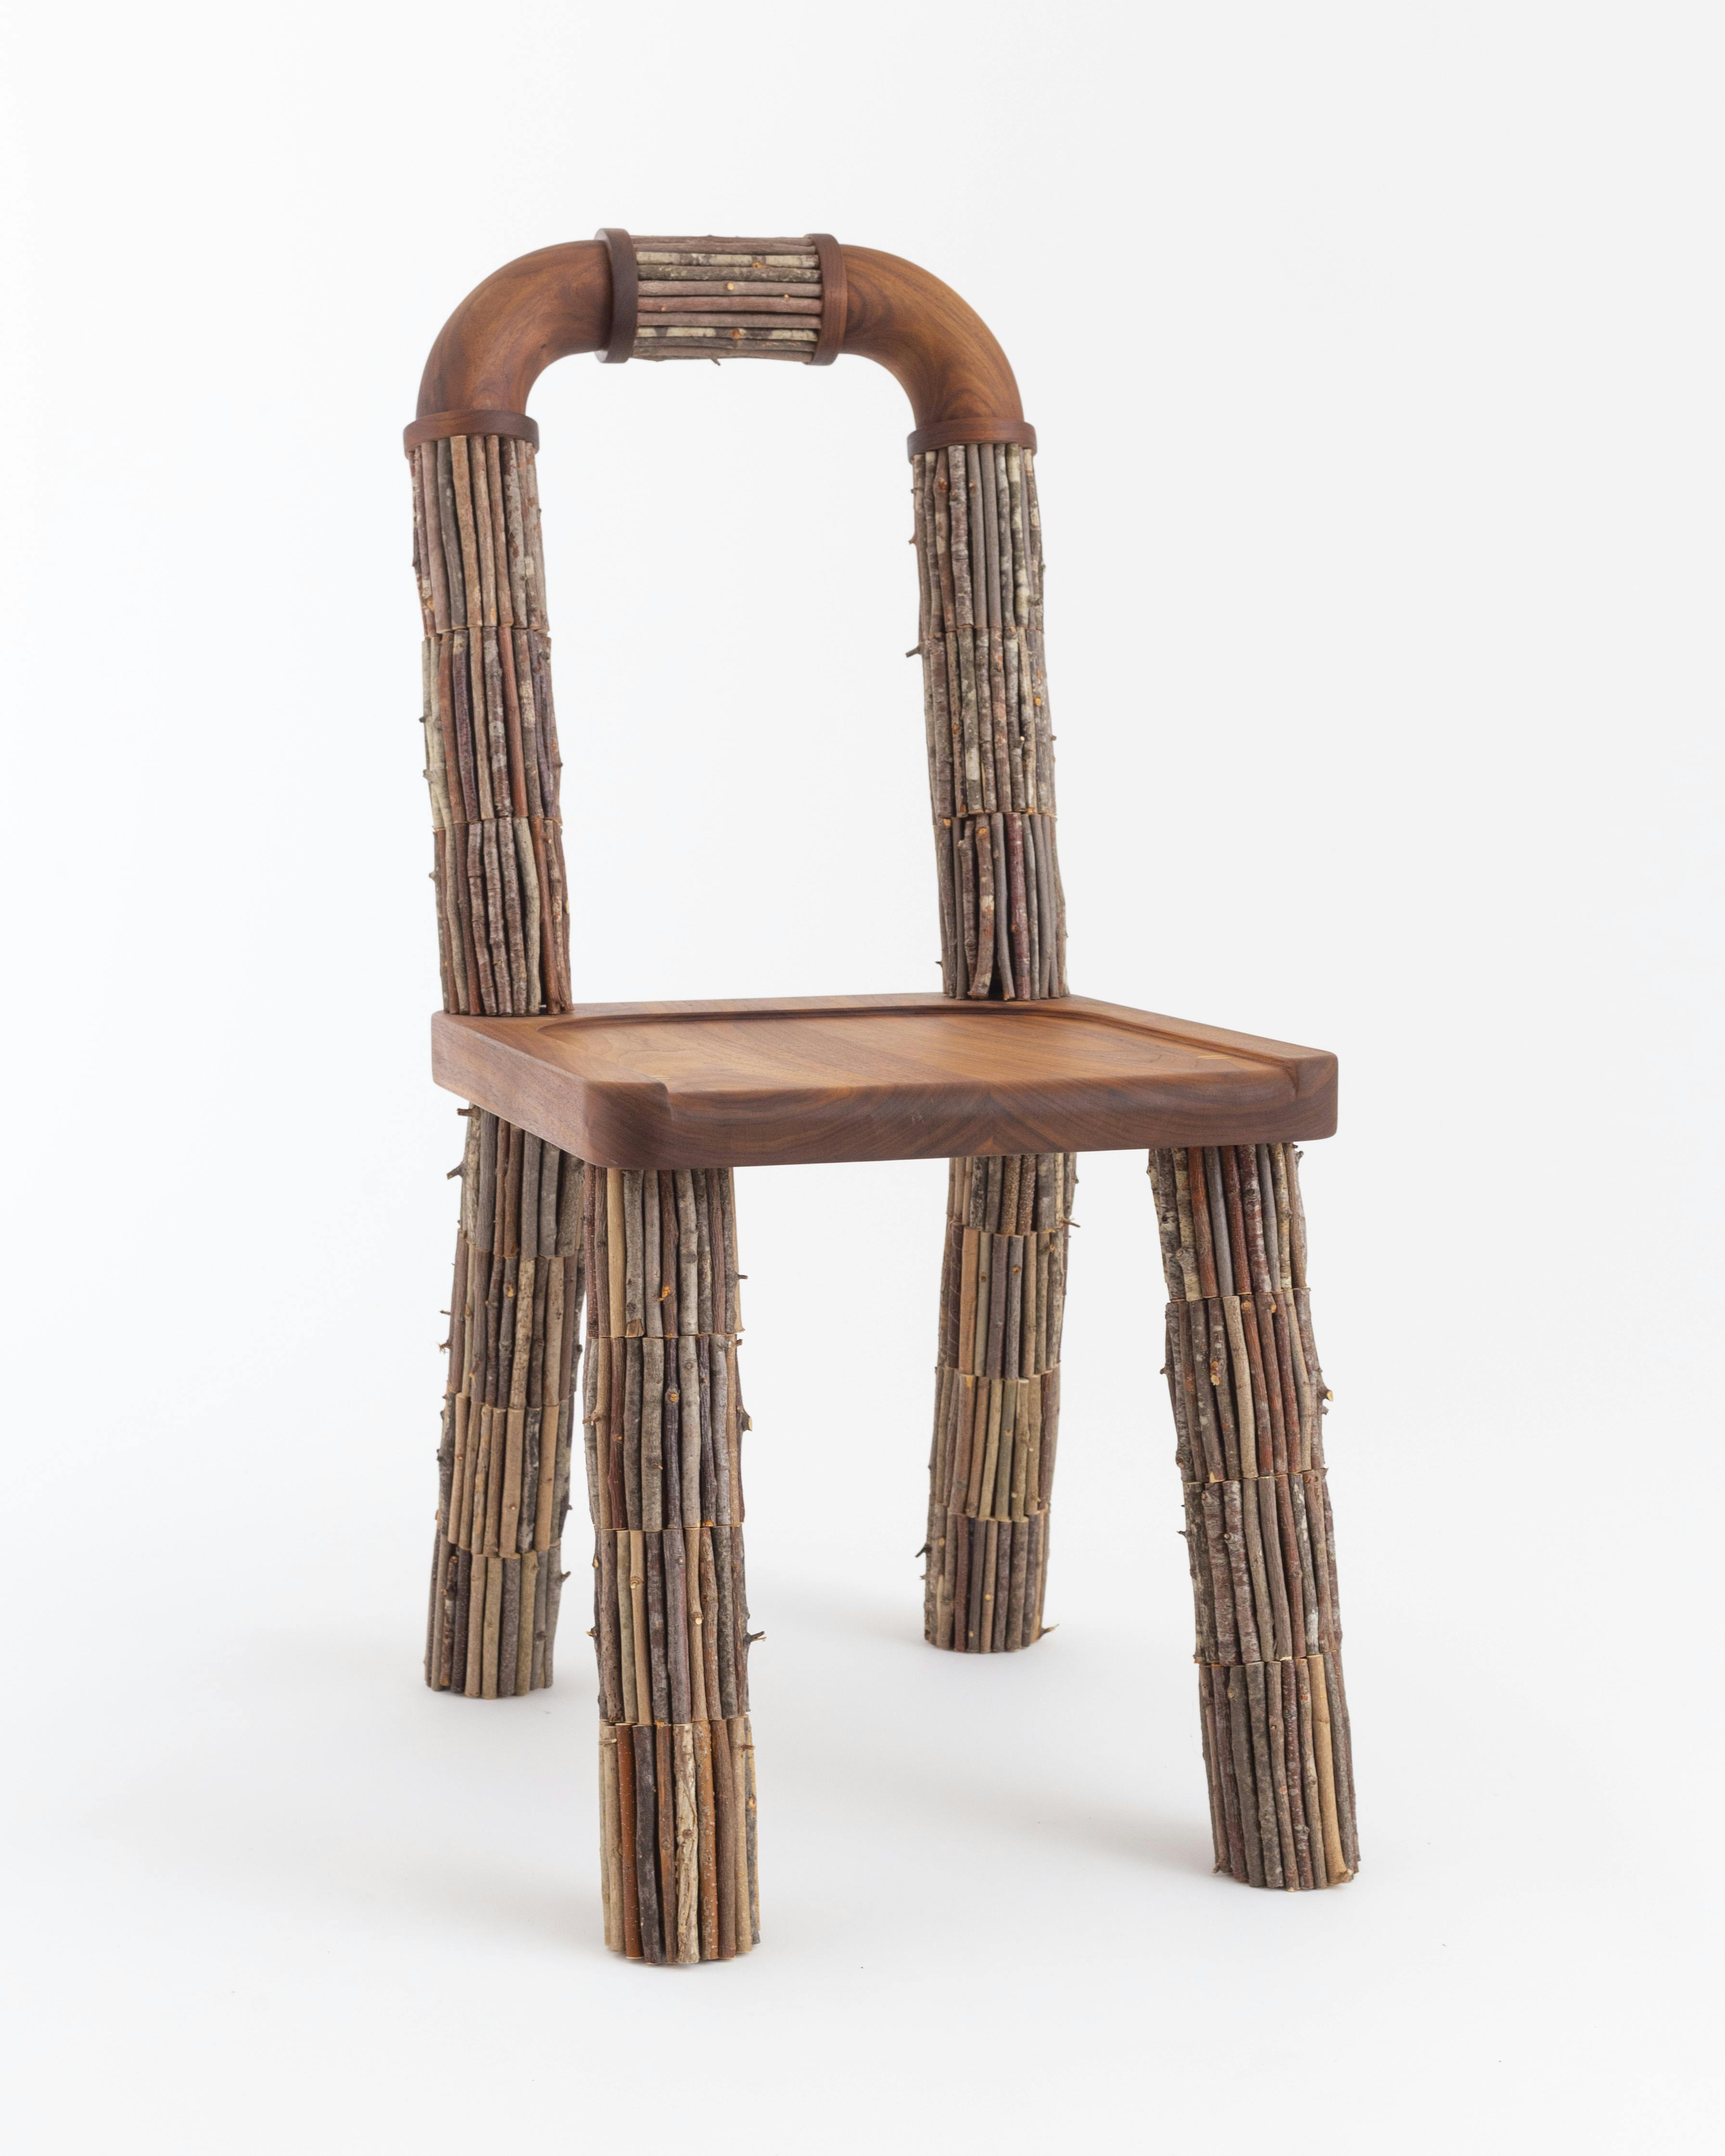 Traditional Chair by Theju Nimmagadda